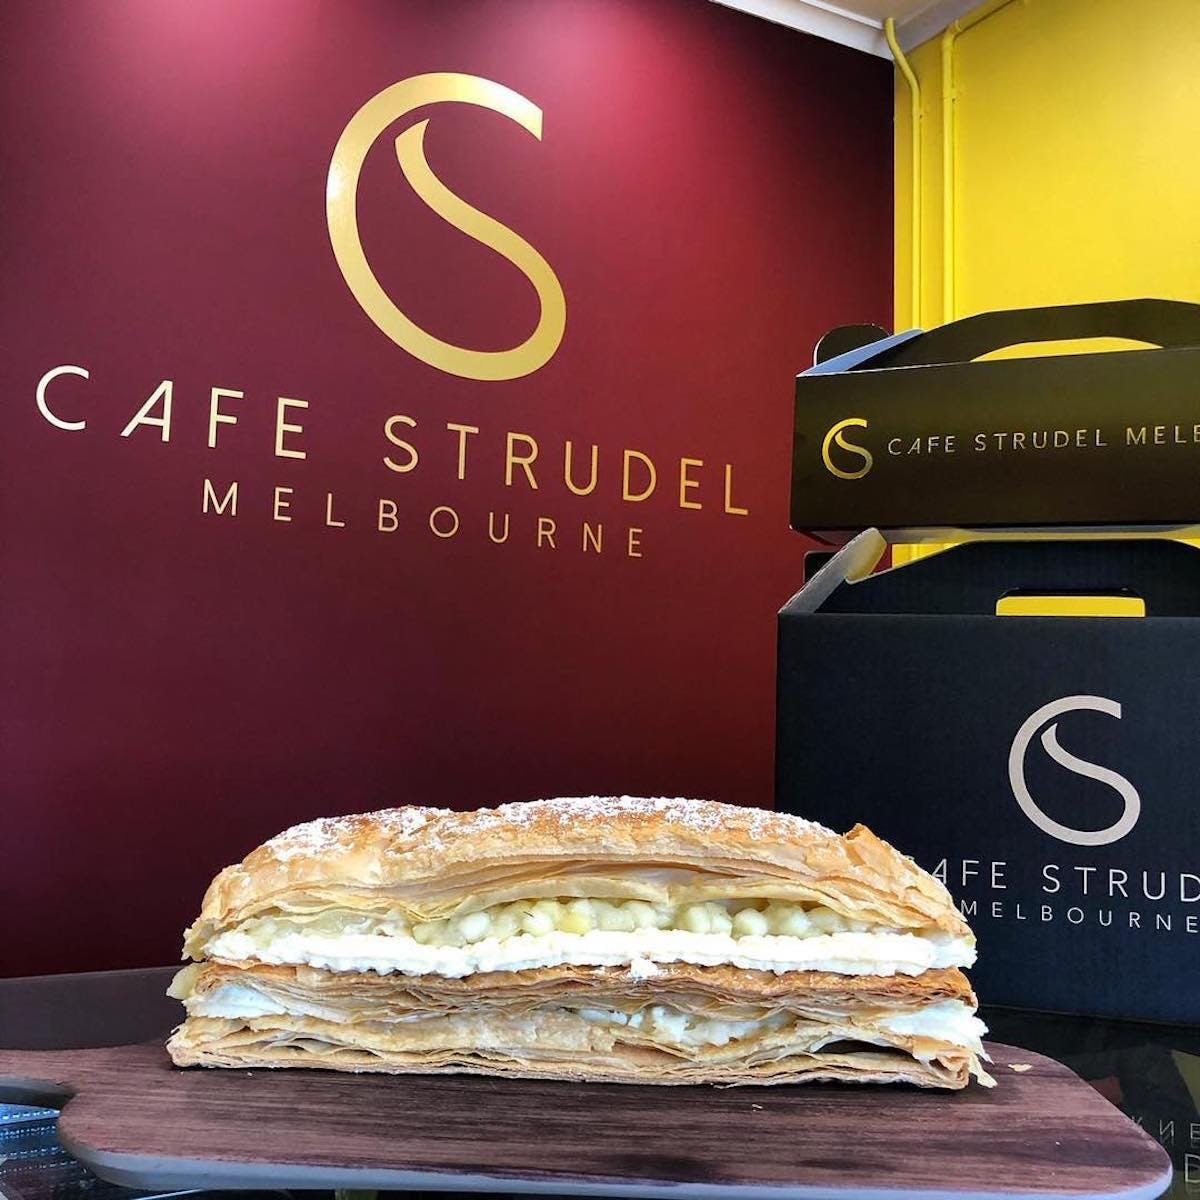 Cafe Strudel Melbourne - New South Wales Tourism 